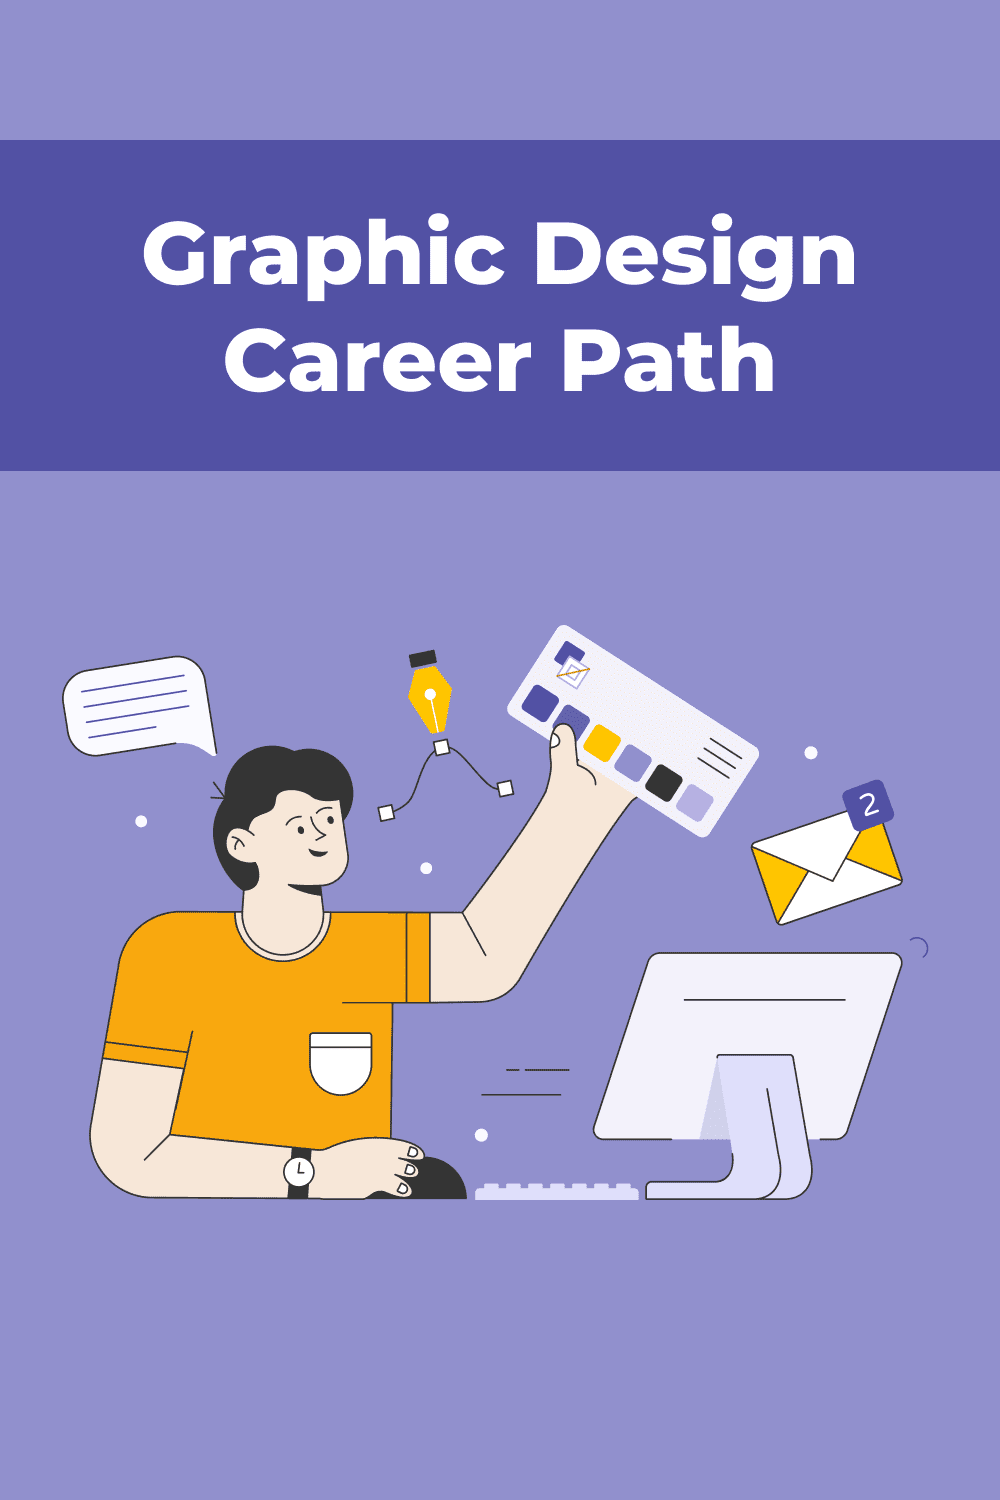 graphic design career path pinterest 202.